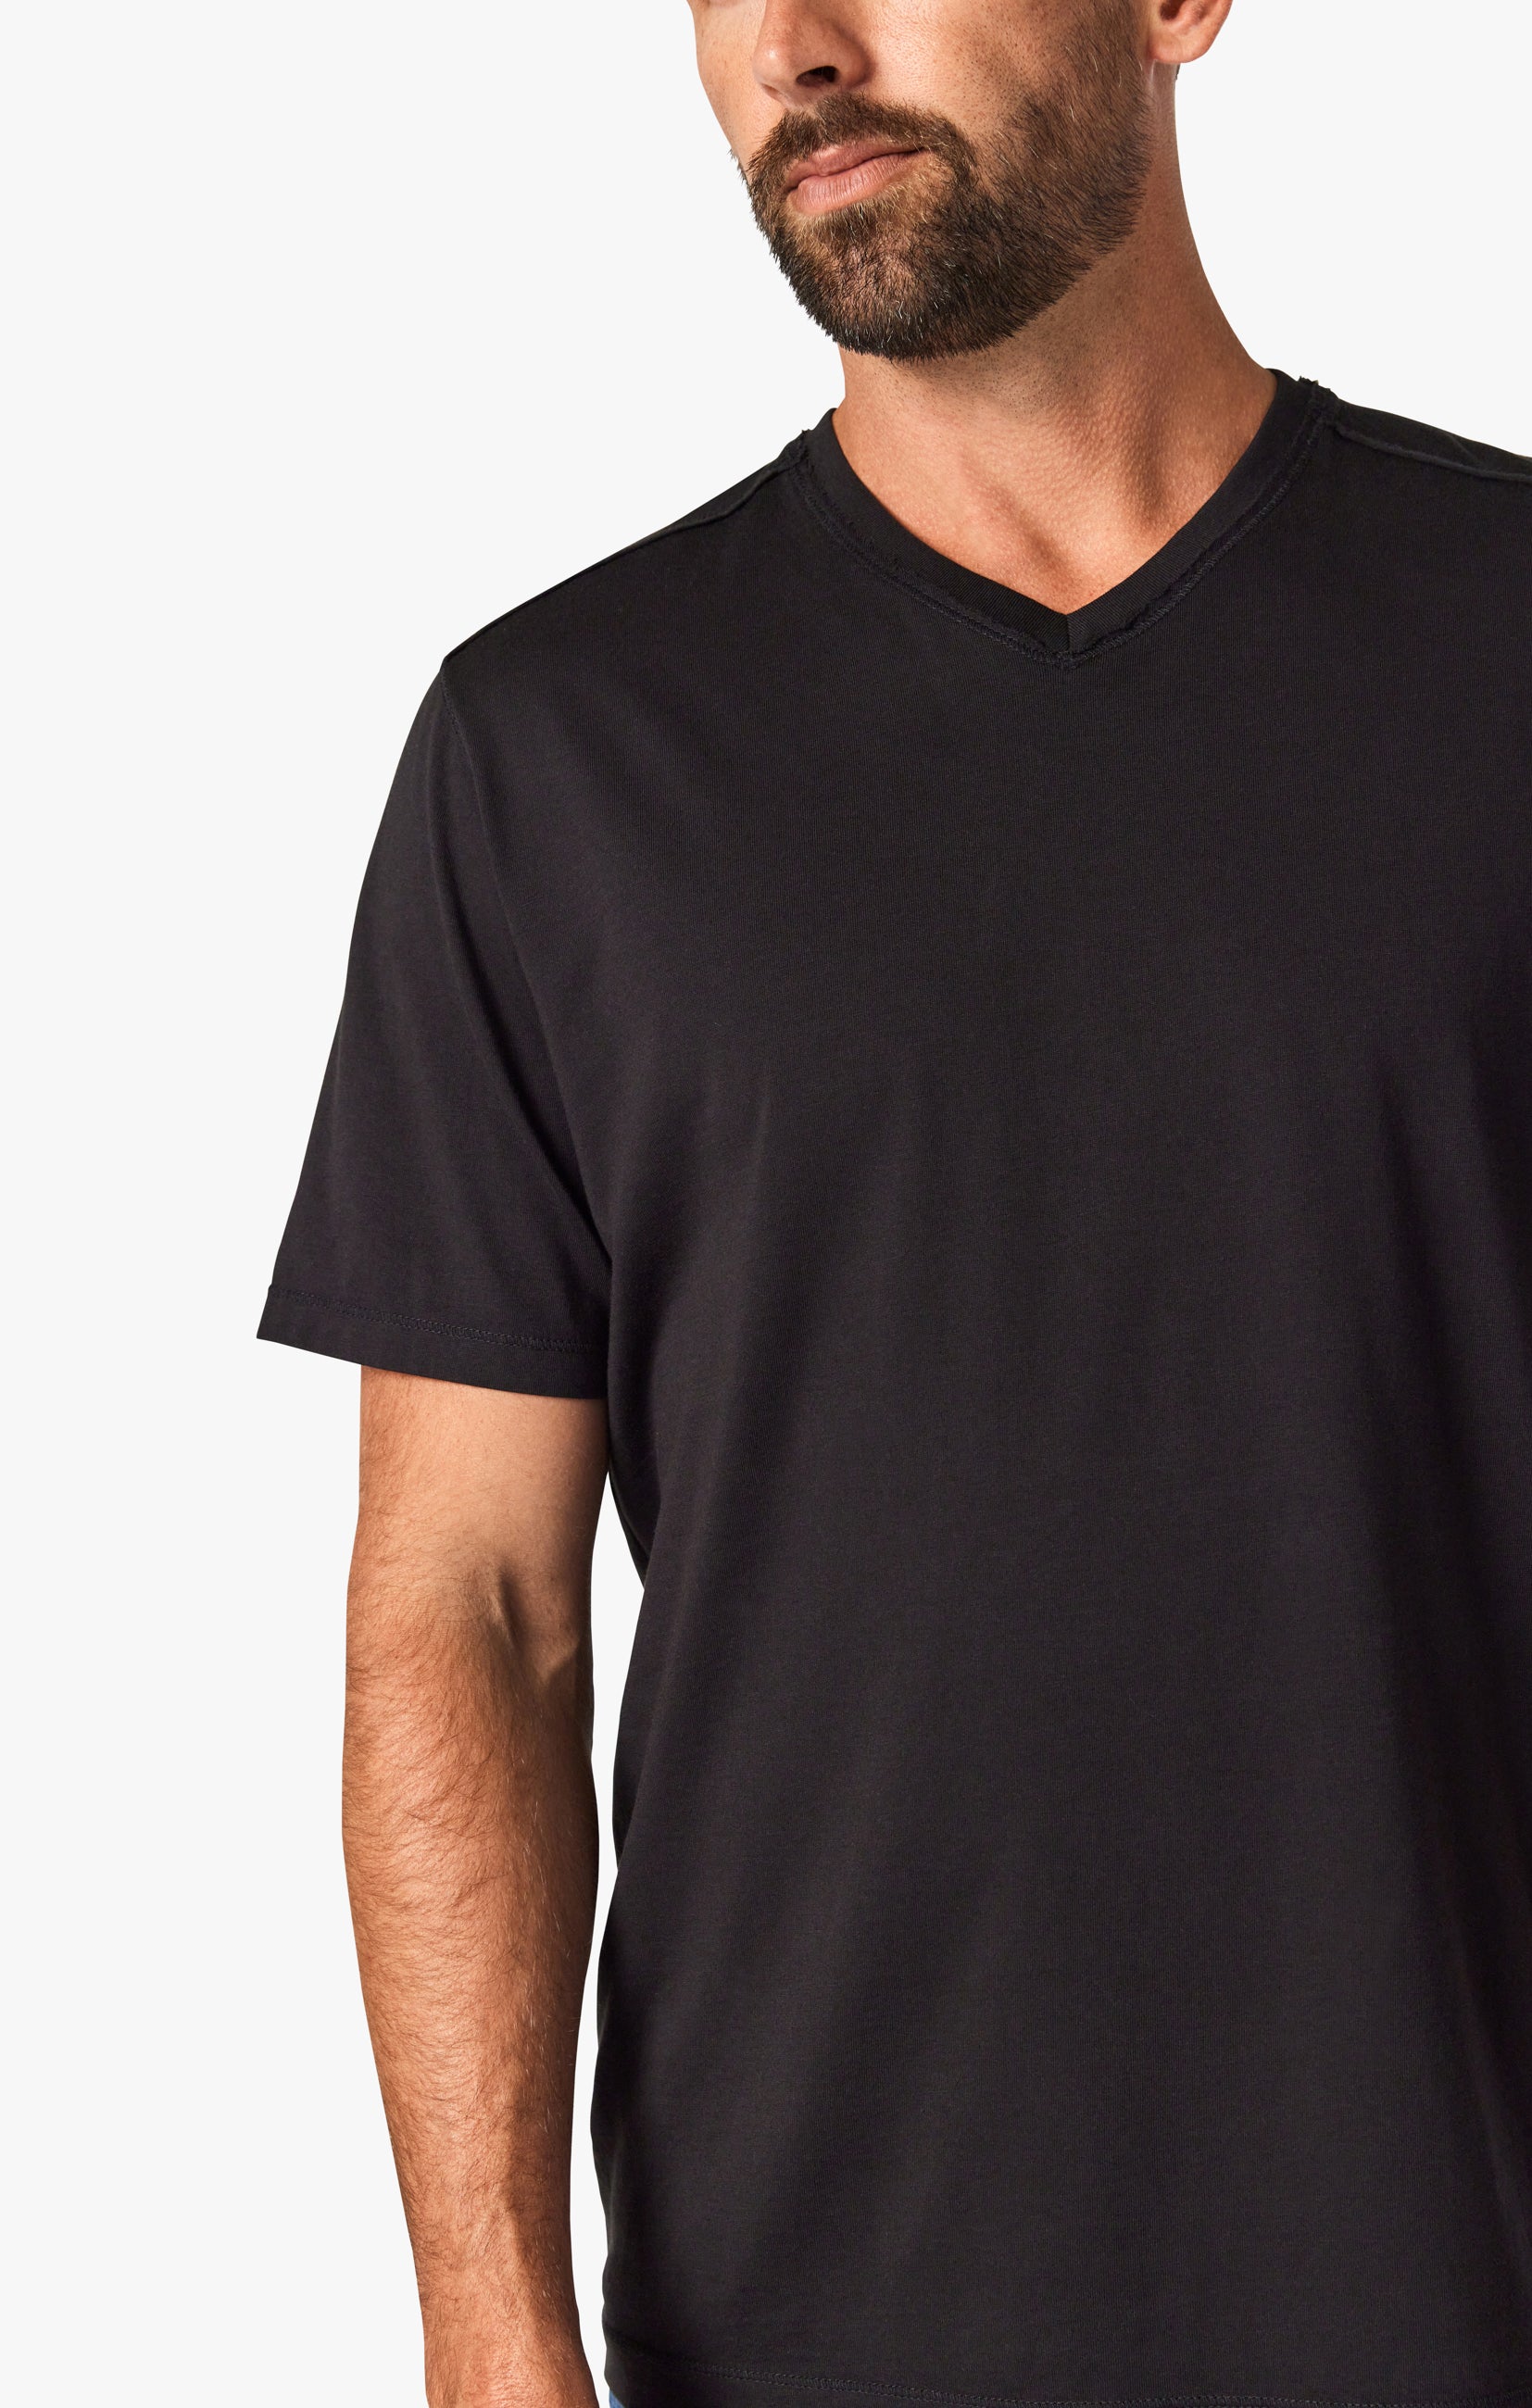 34 Heritage Men's Deconstructed V-Neck T-Shirt in Black – 34 Heritage Canada